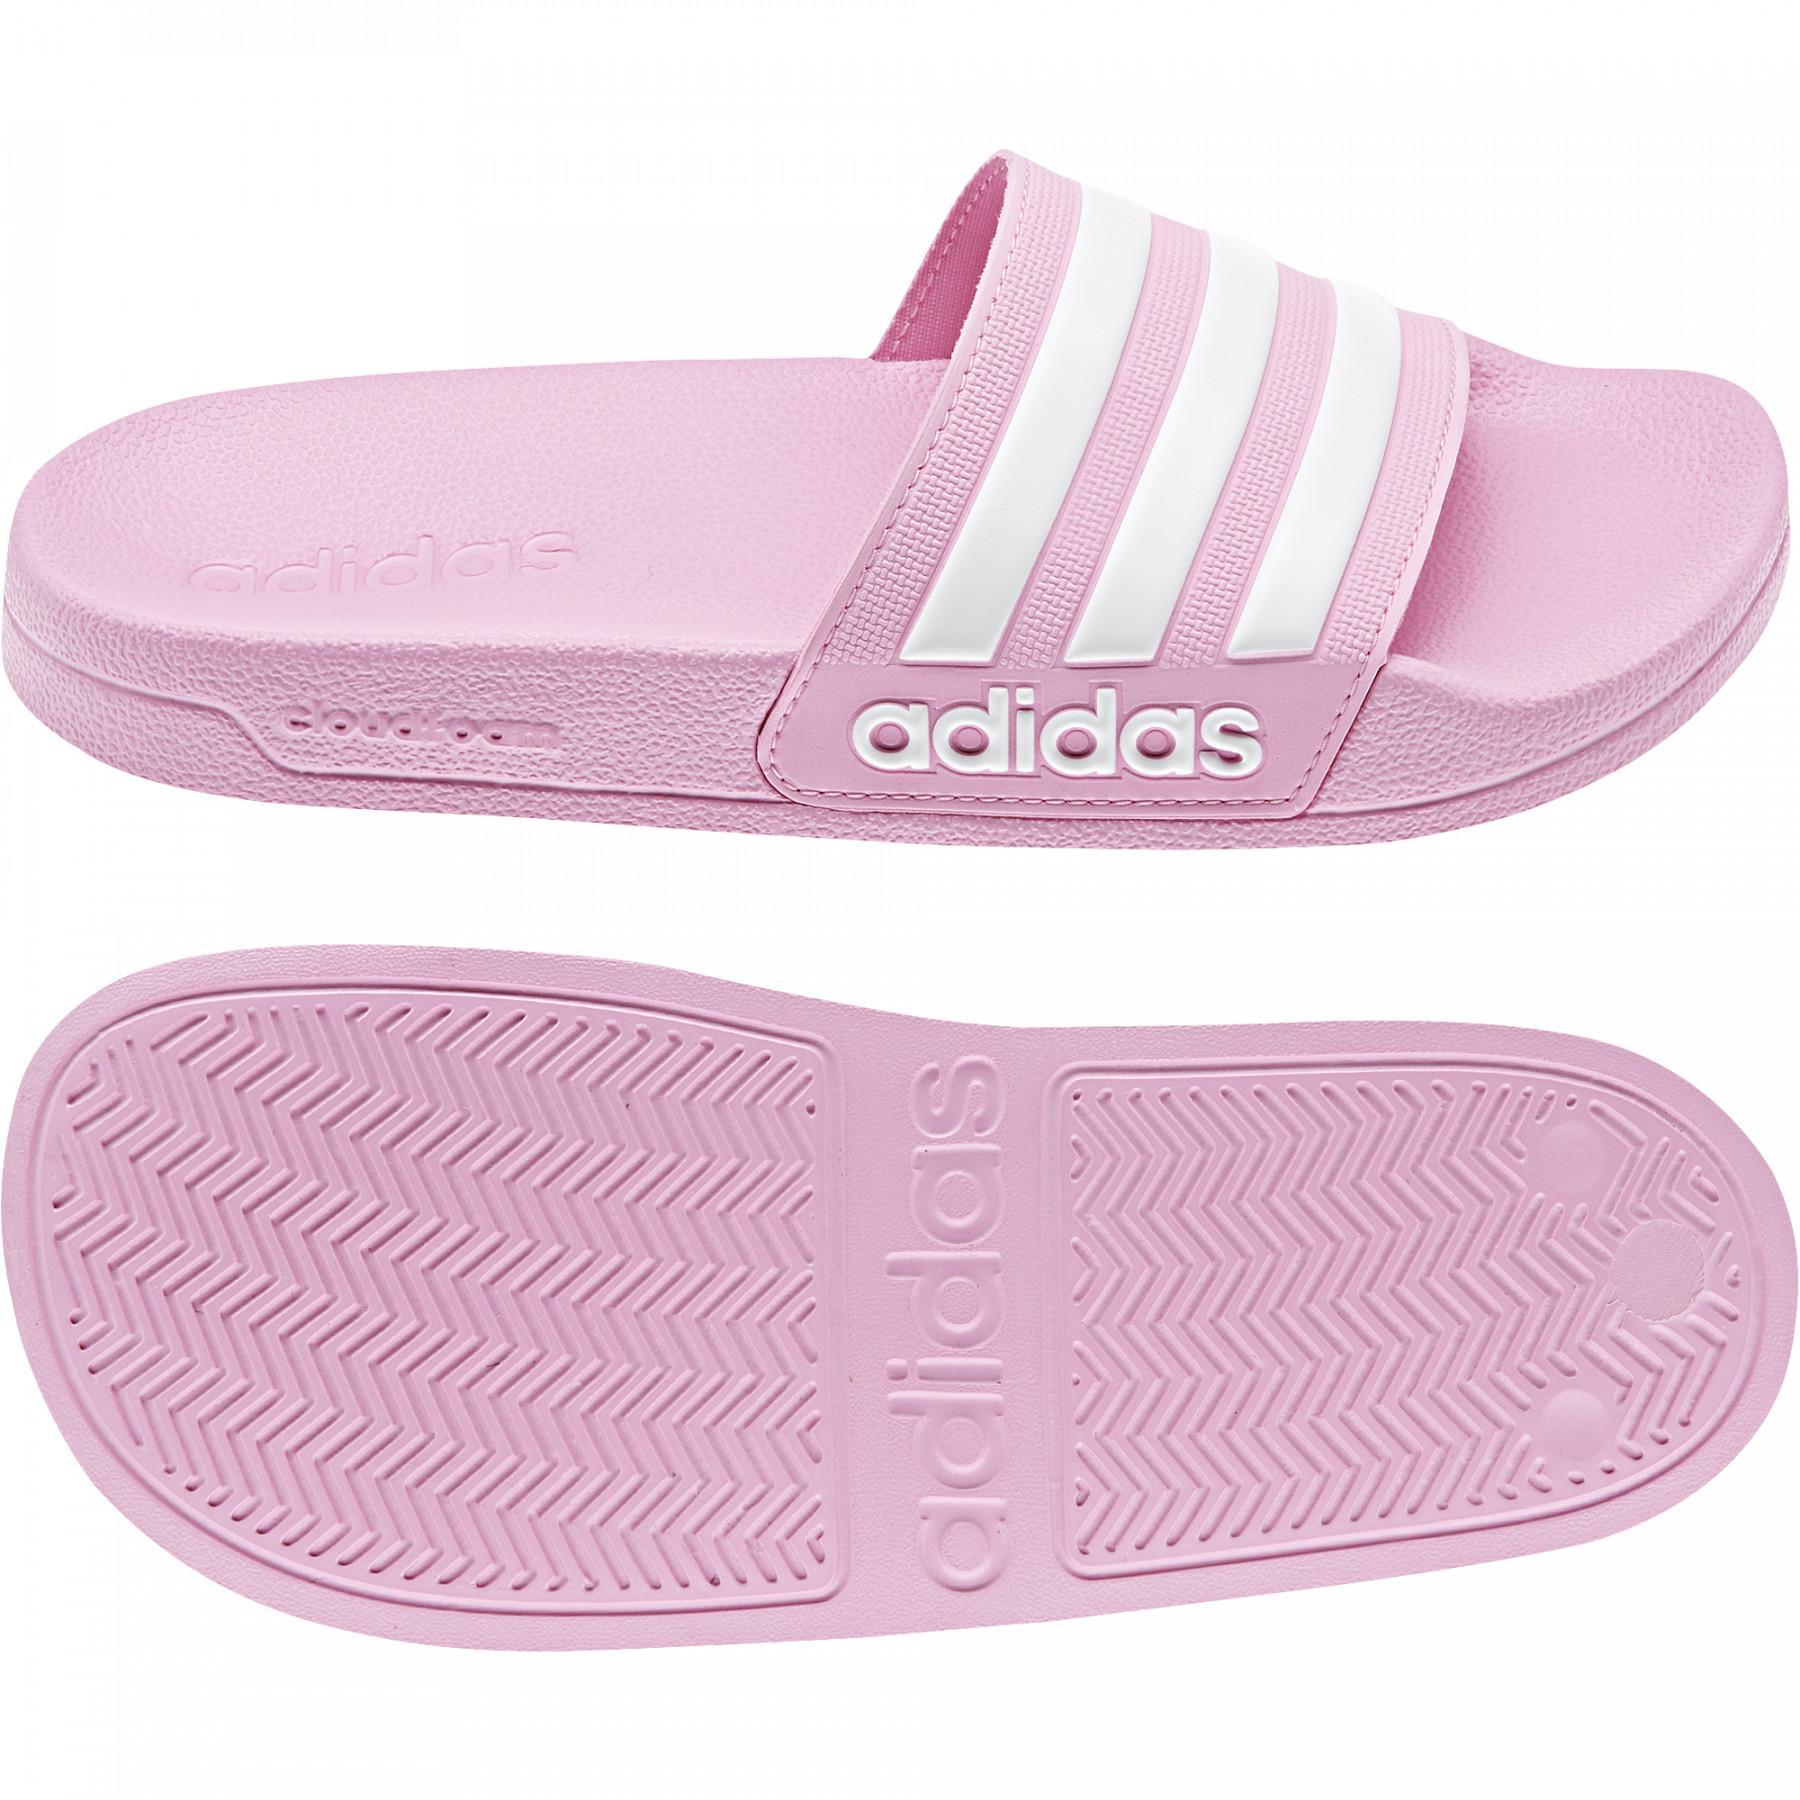 Solo haz Infrarrojo Repelente Claquette-Kind adidas Adilette Shower - adidas - Sandalen - Schuhe